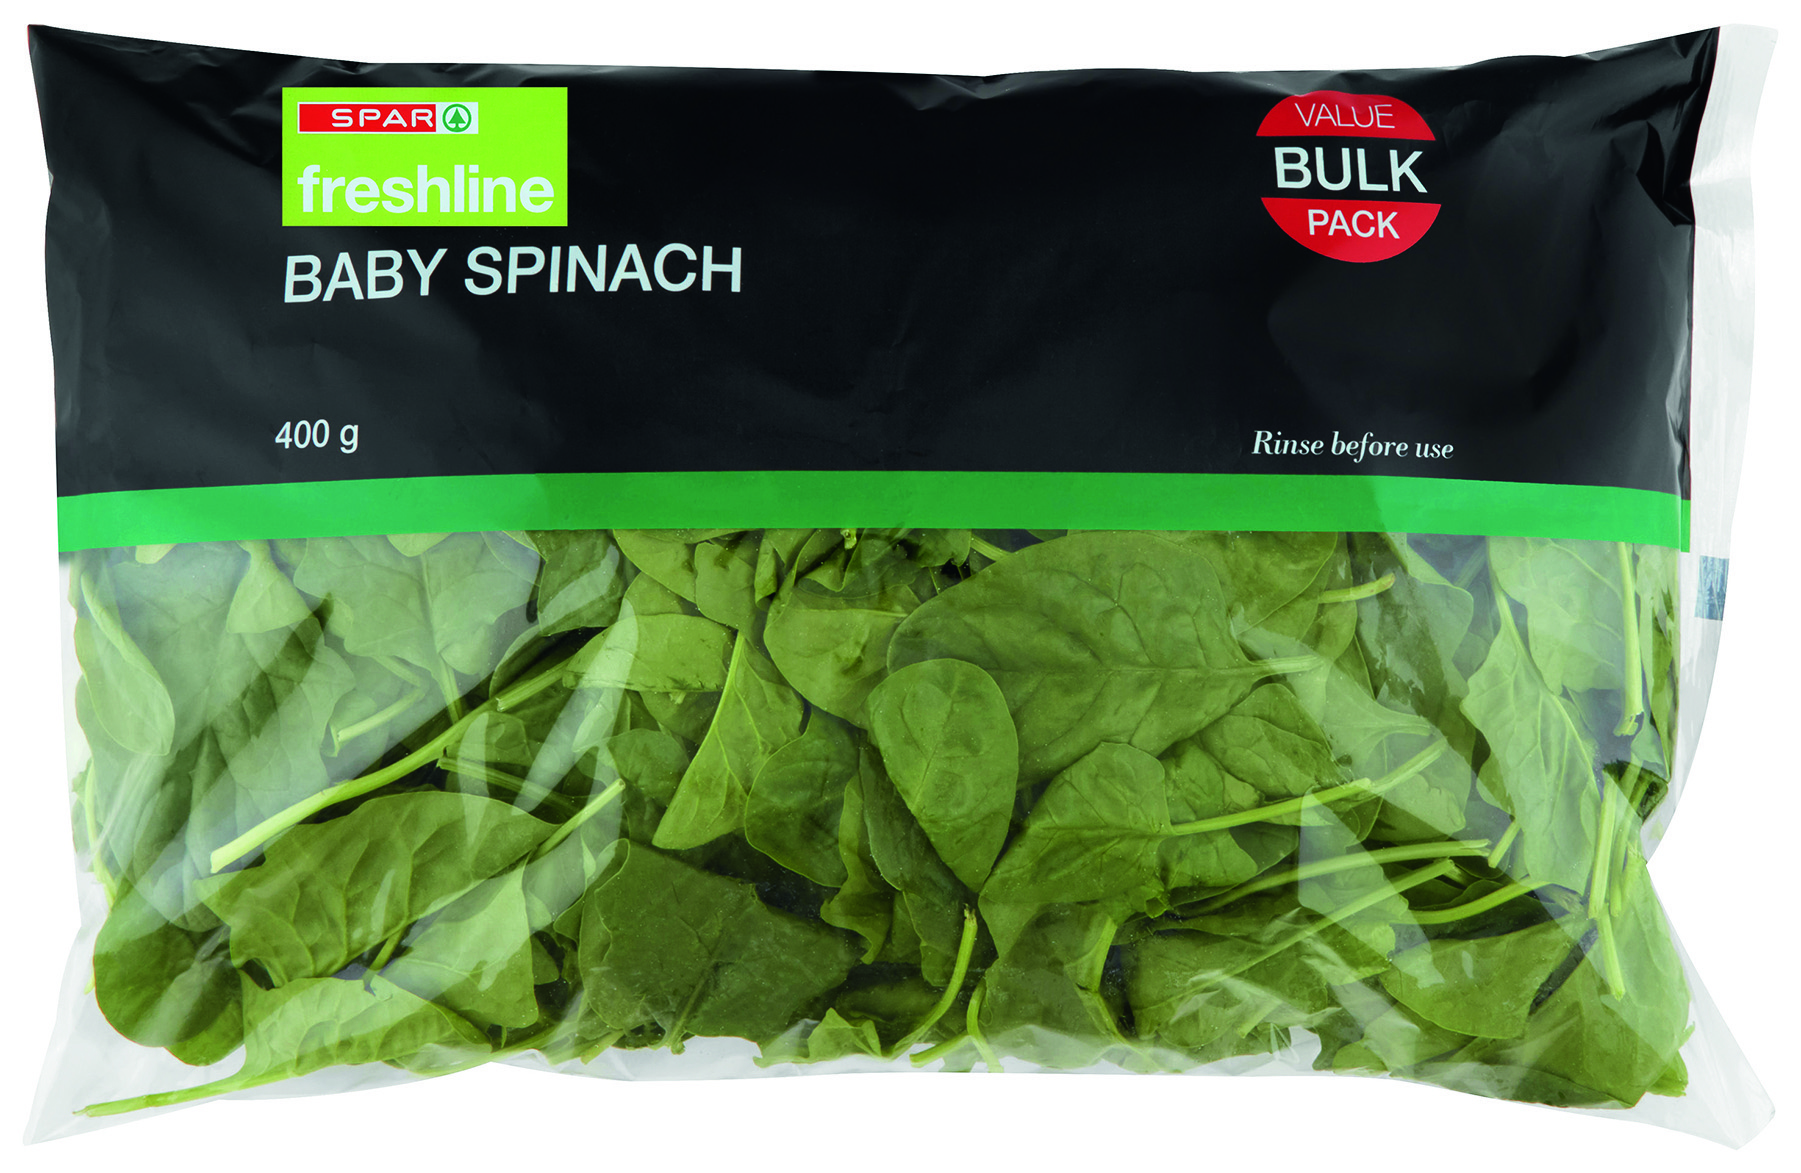 freshline baby spinach 